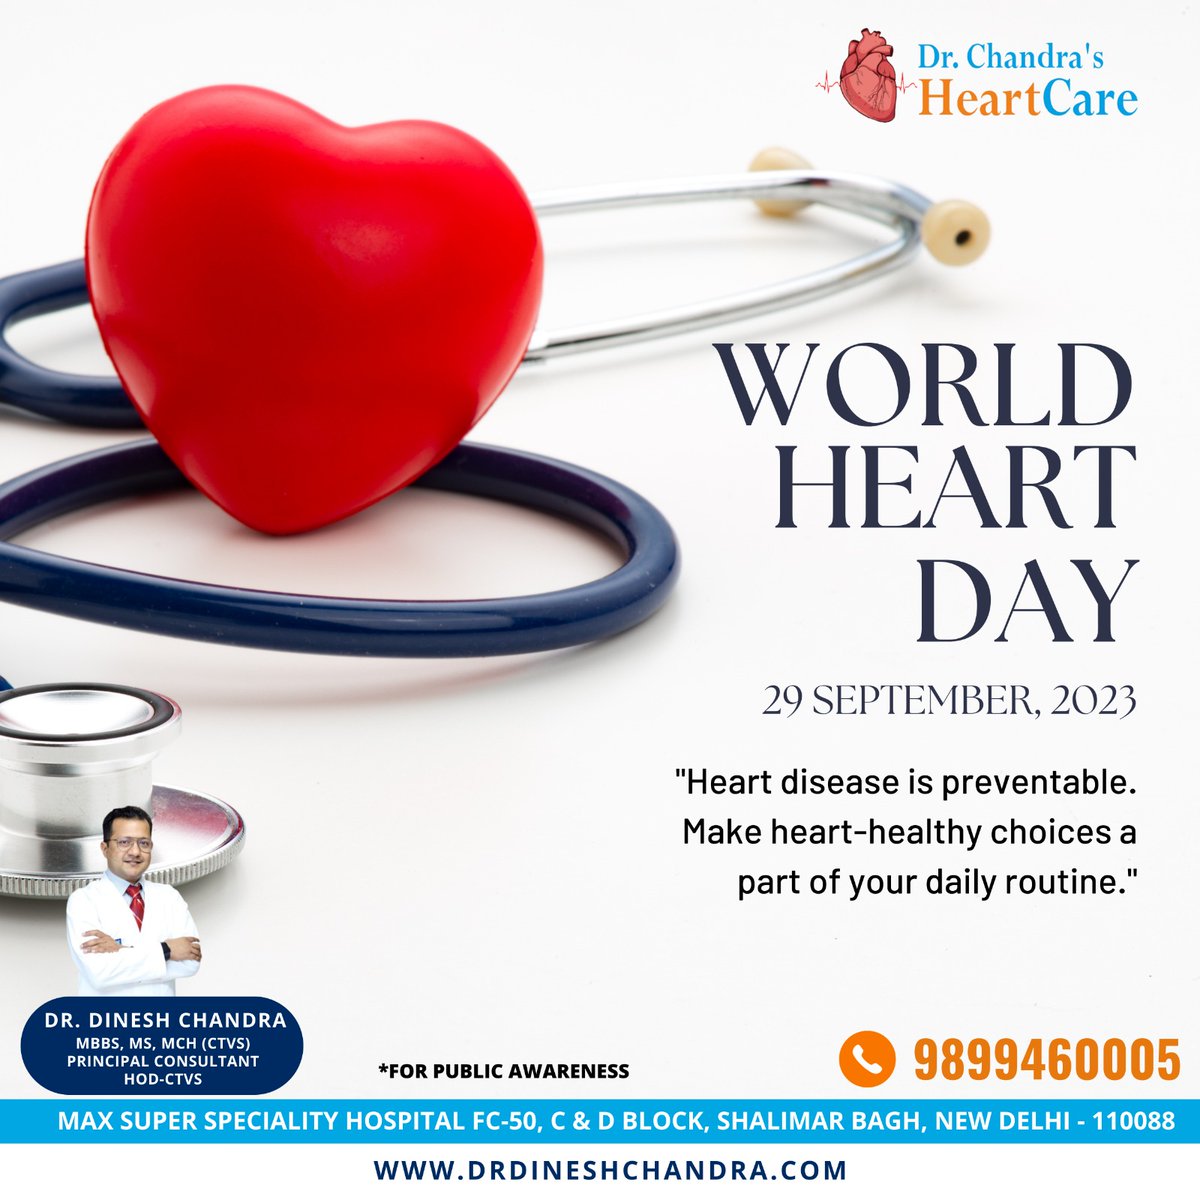 ❤️ World Heart Day ❤️

#WorldHeartDay #UseHeart #HeartHealth #HeartDisease #PreventHeartDisease #HeartAttack #Stroke #CardiovascularHealth #HealthyDiet #StressManagement #QuitSmoking #EarlyDetection #FamilyHistory #Awareness #MyHeartMyLife #HeartStrong #BeatHeartDisease